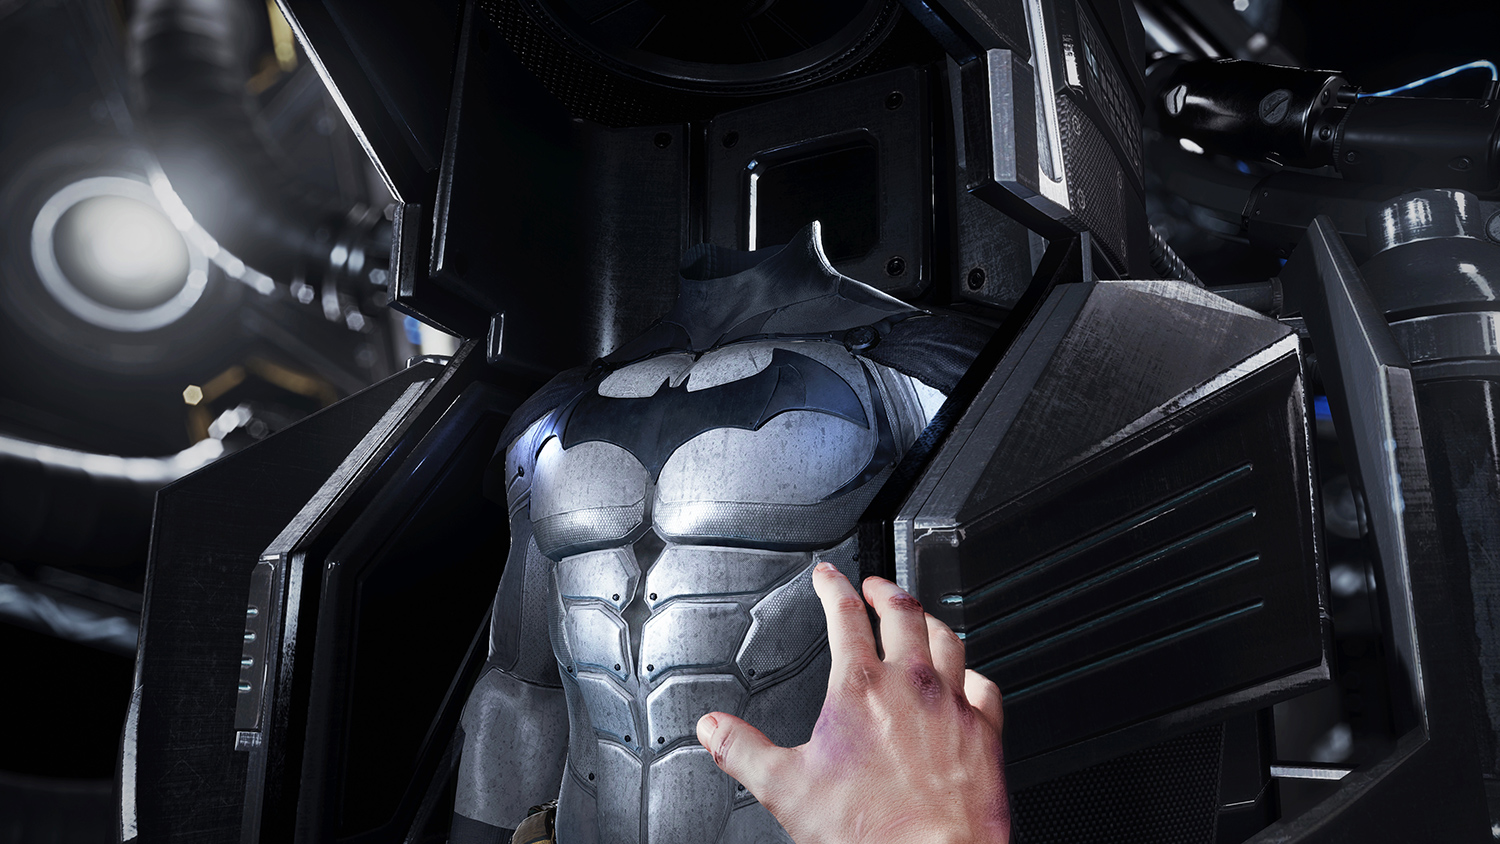 Arkham VR is all Bat-flash, no Bat-substance